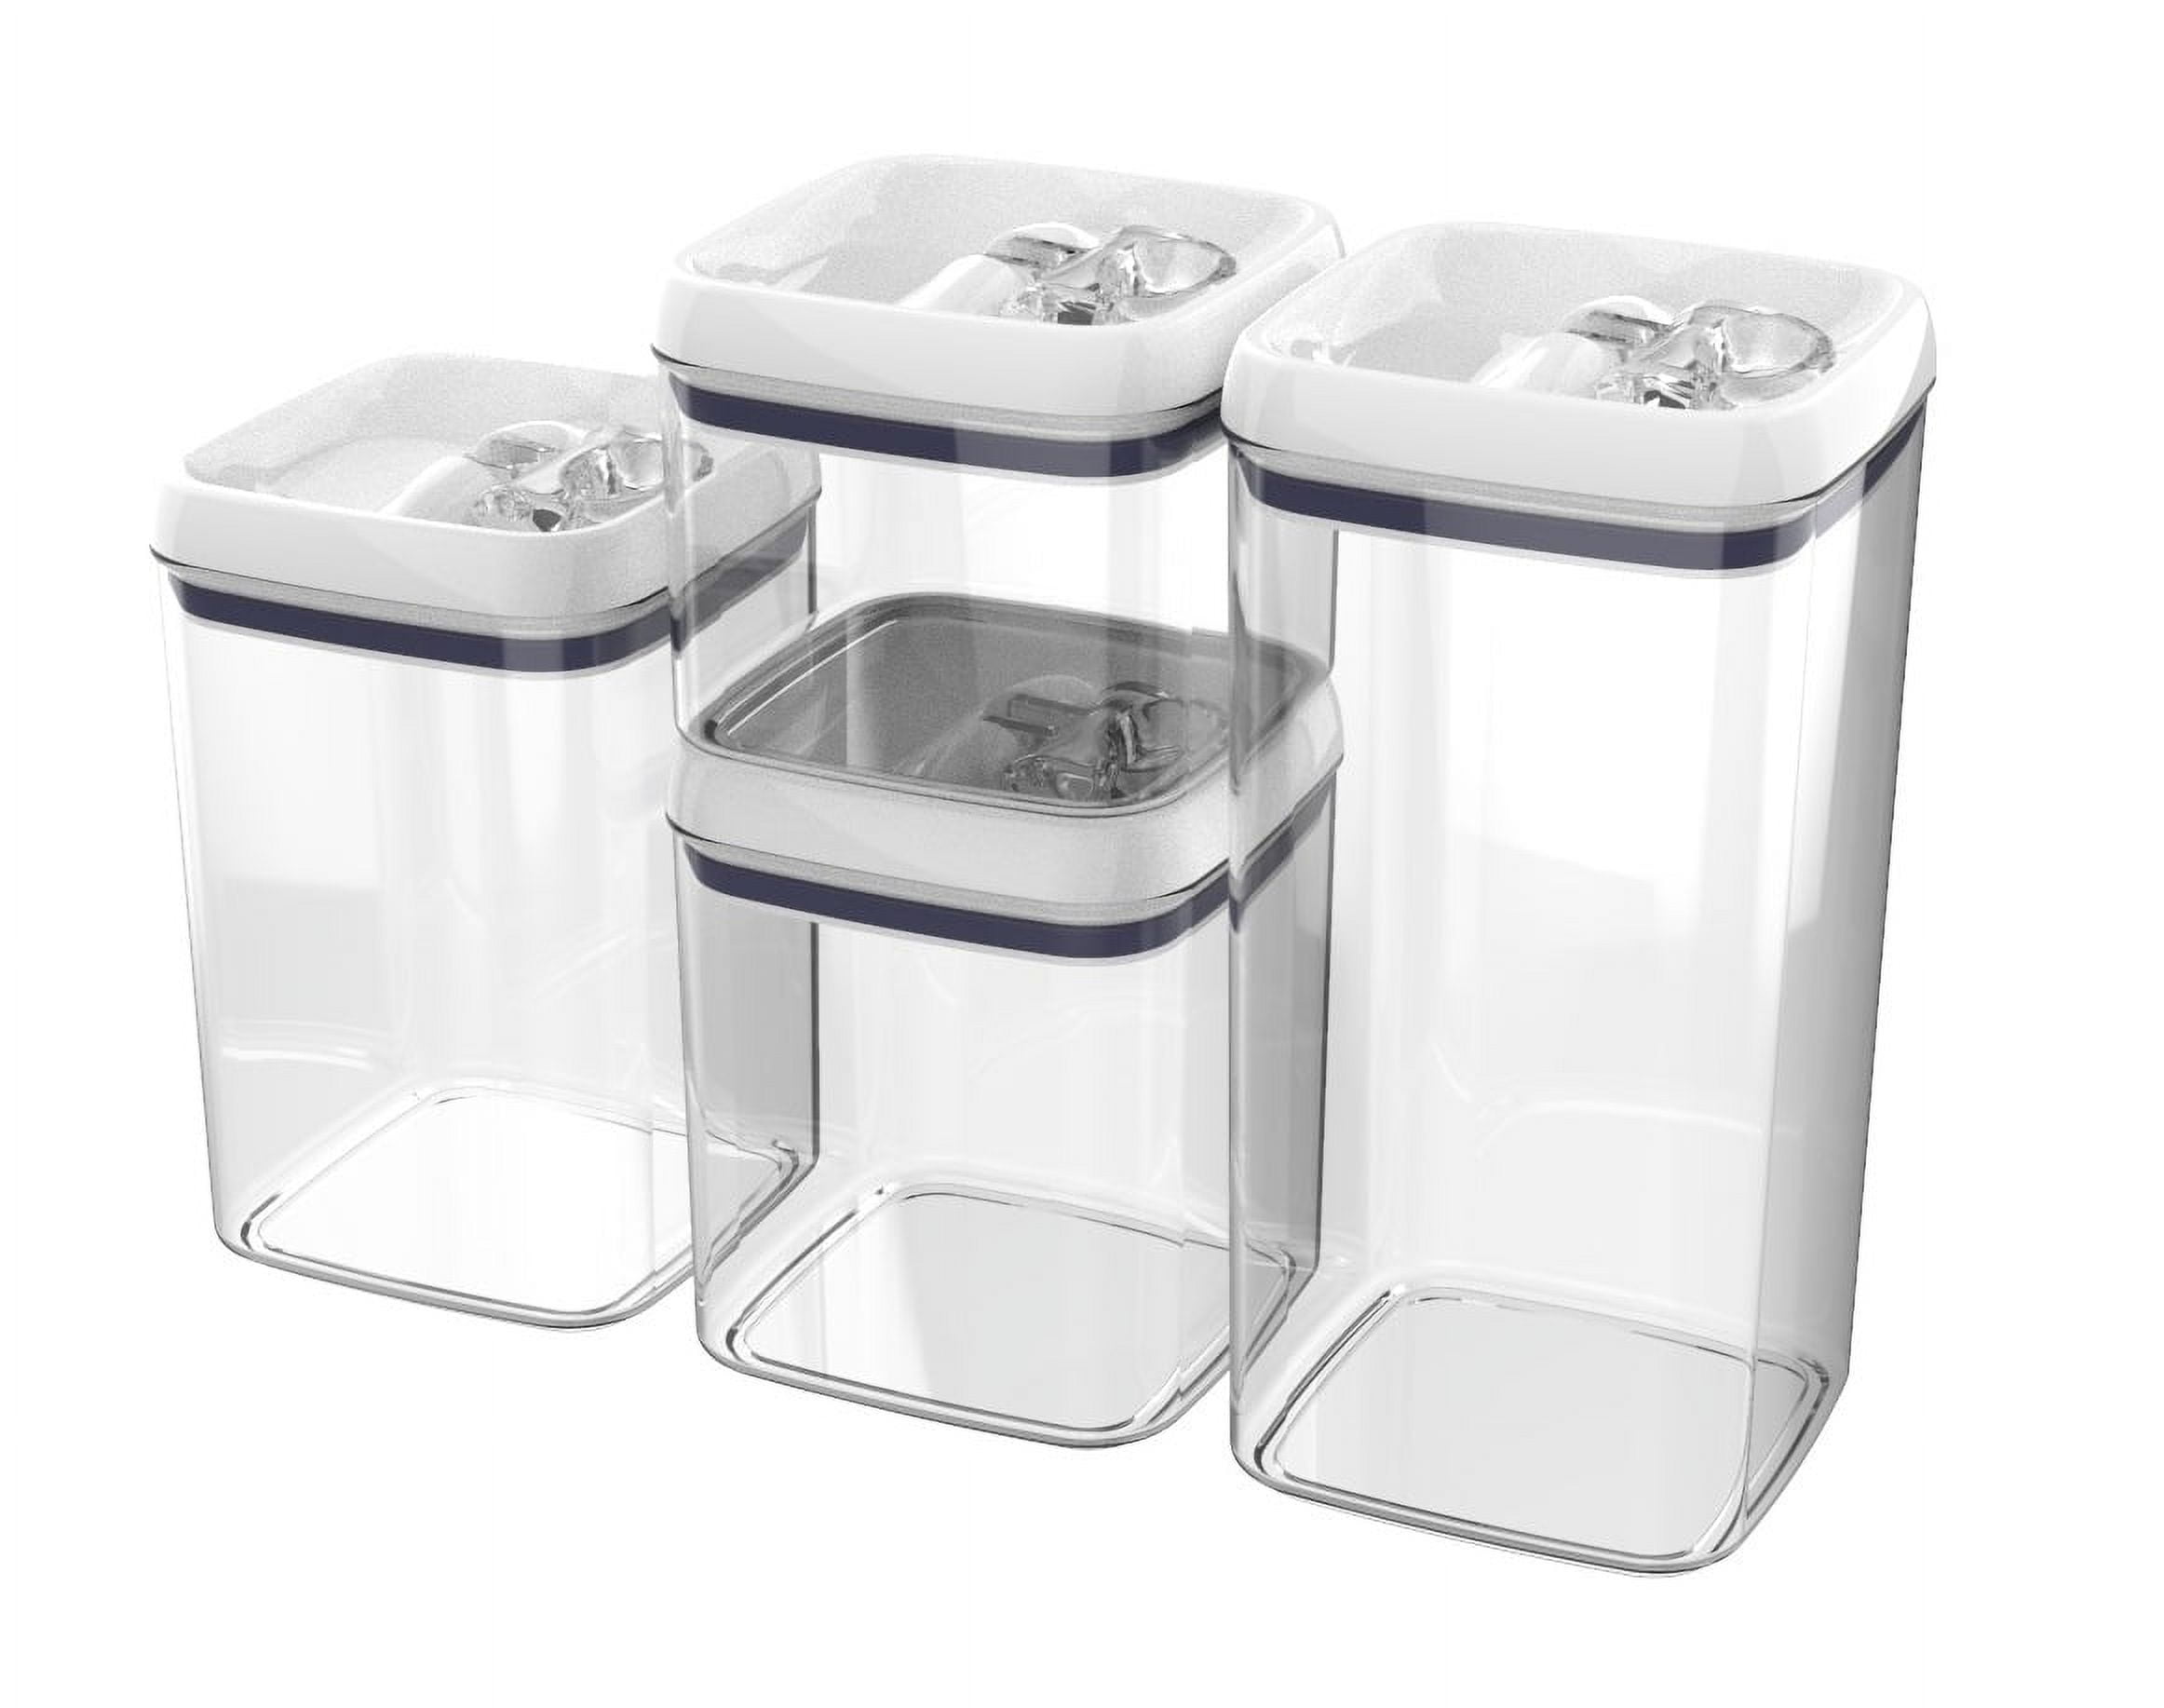 Mini Square Plastic Food Freezer Kitchen Storage Container with Lid  Plastic  container storage, Small plastic storage, Food storage containers